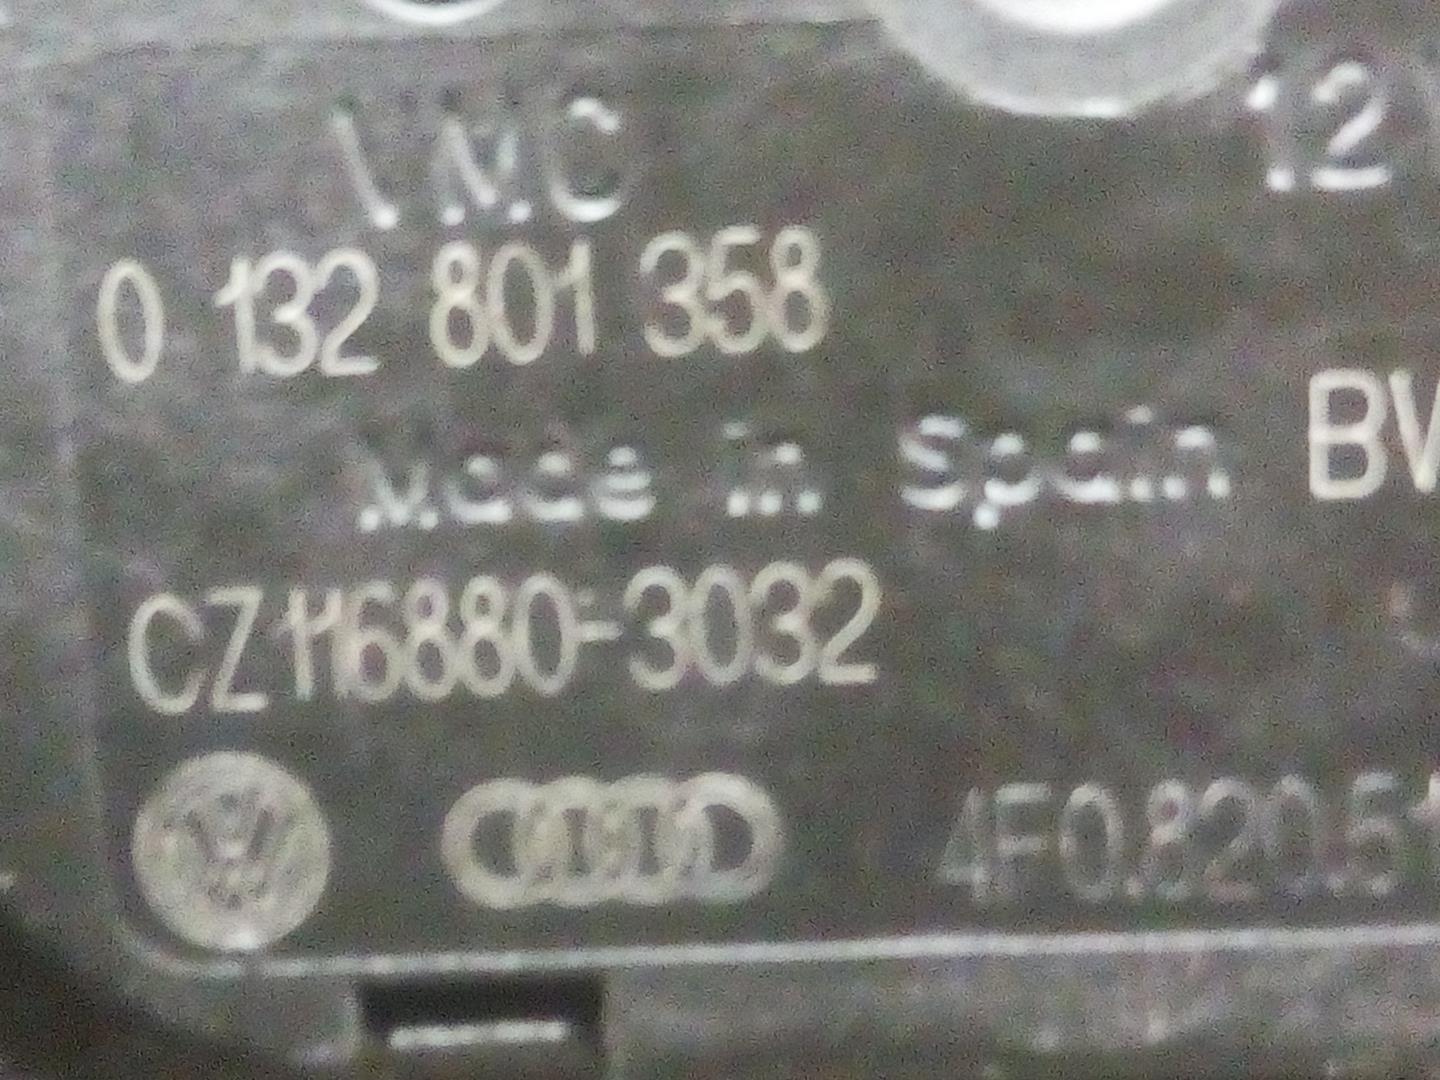 AUDI A6 C6/4F (2004-2011) Salono pečiuko varikliukas 0132801358, CZ1168803032 18588109